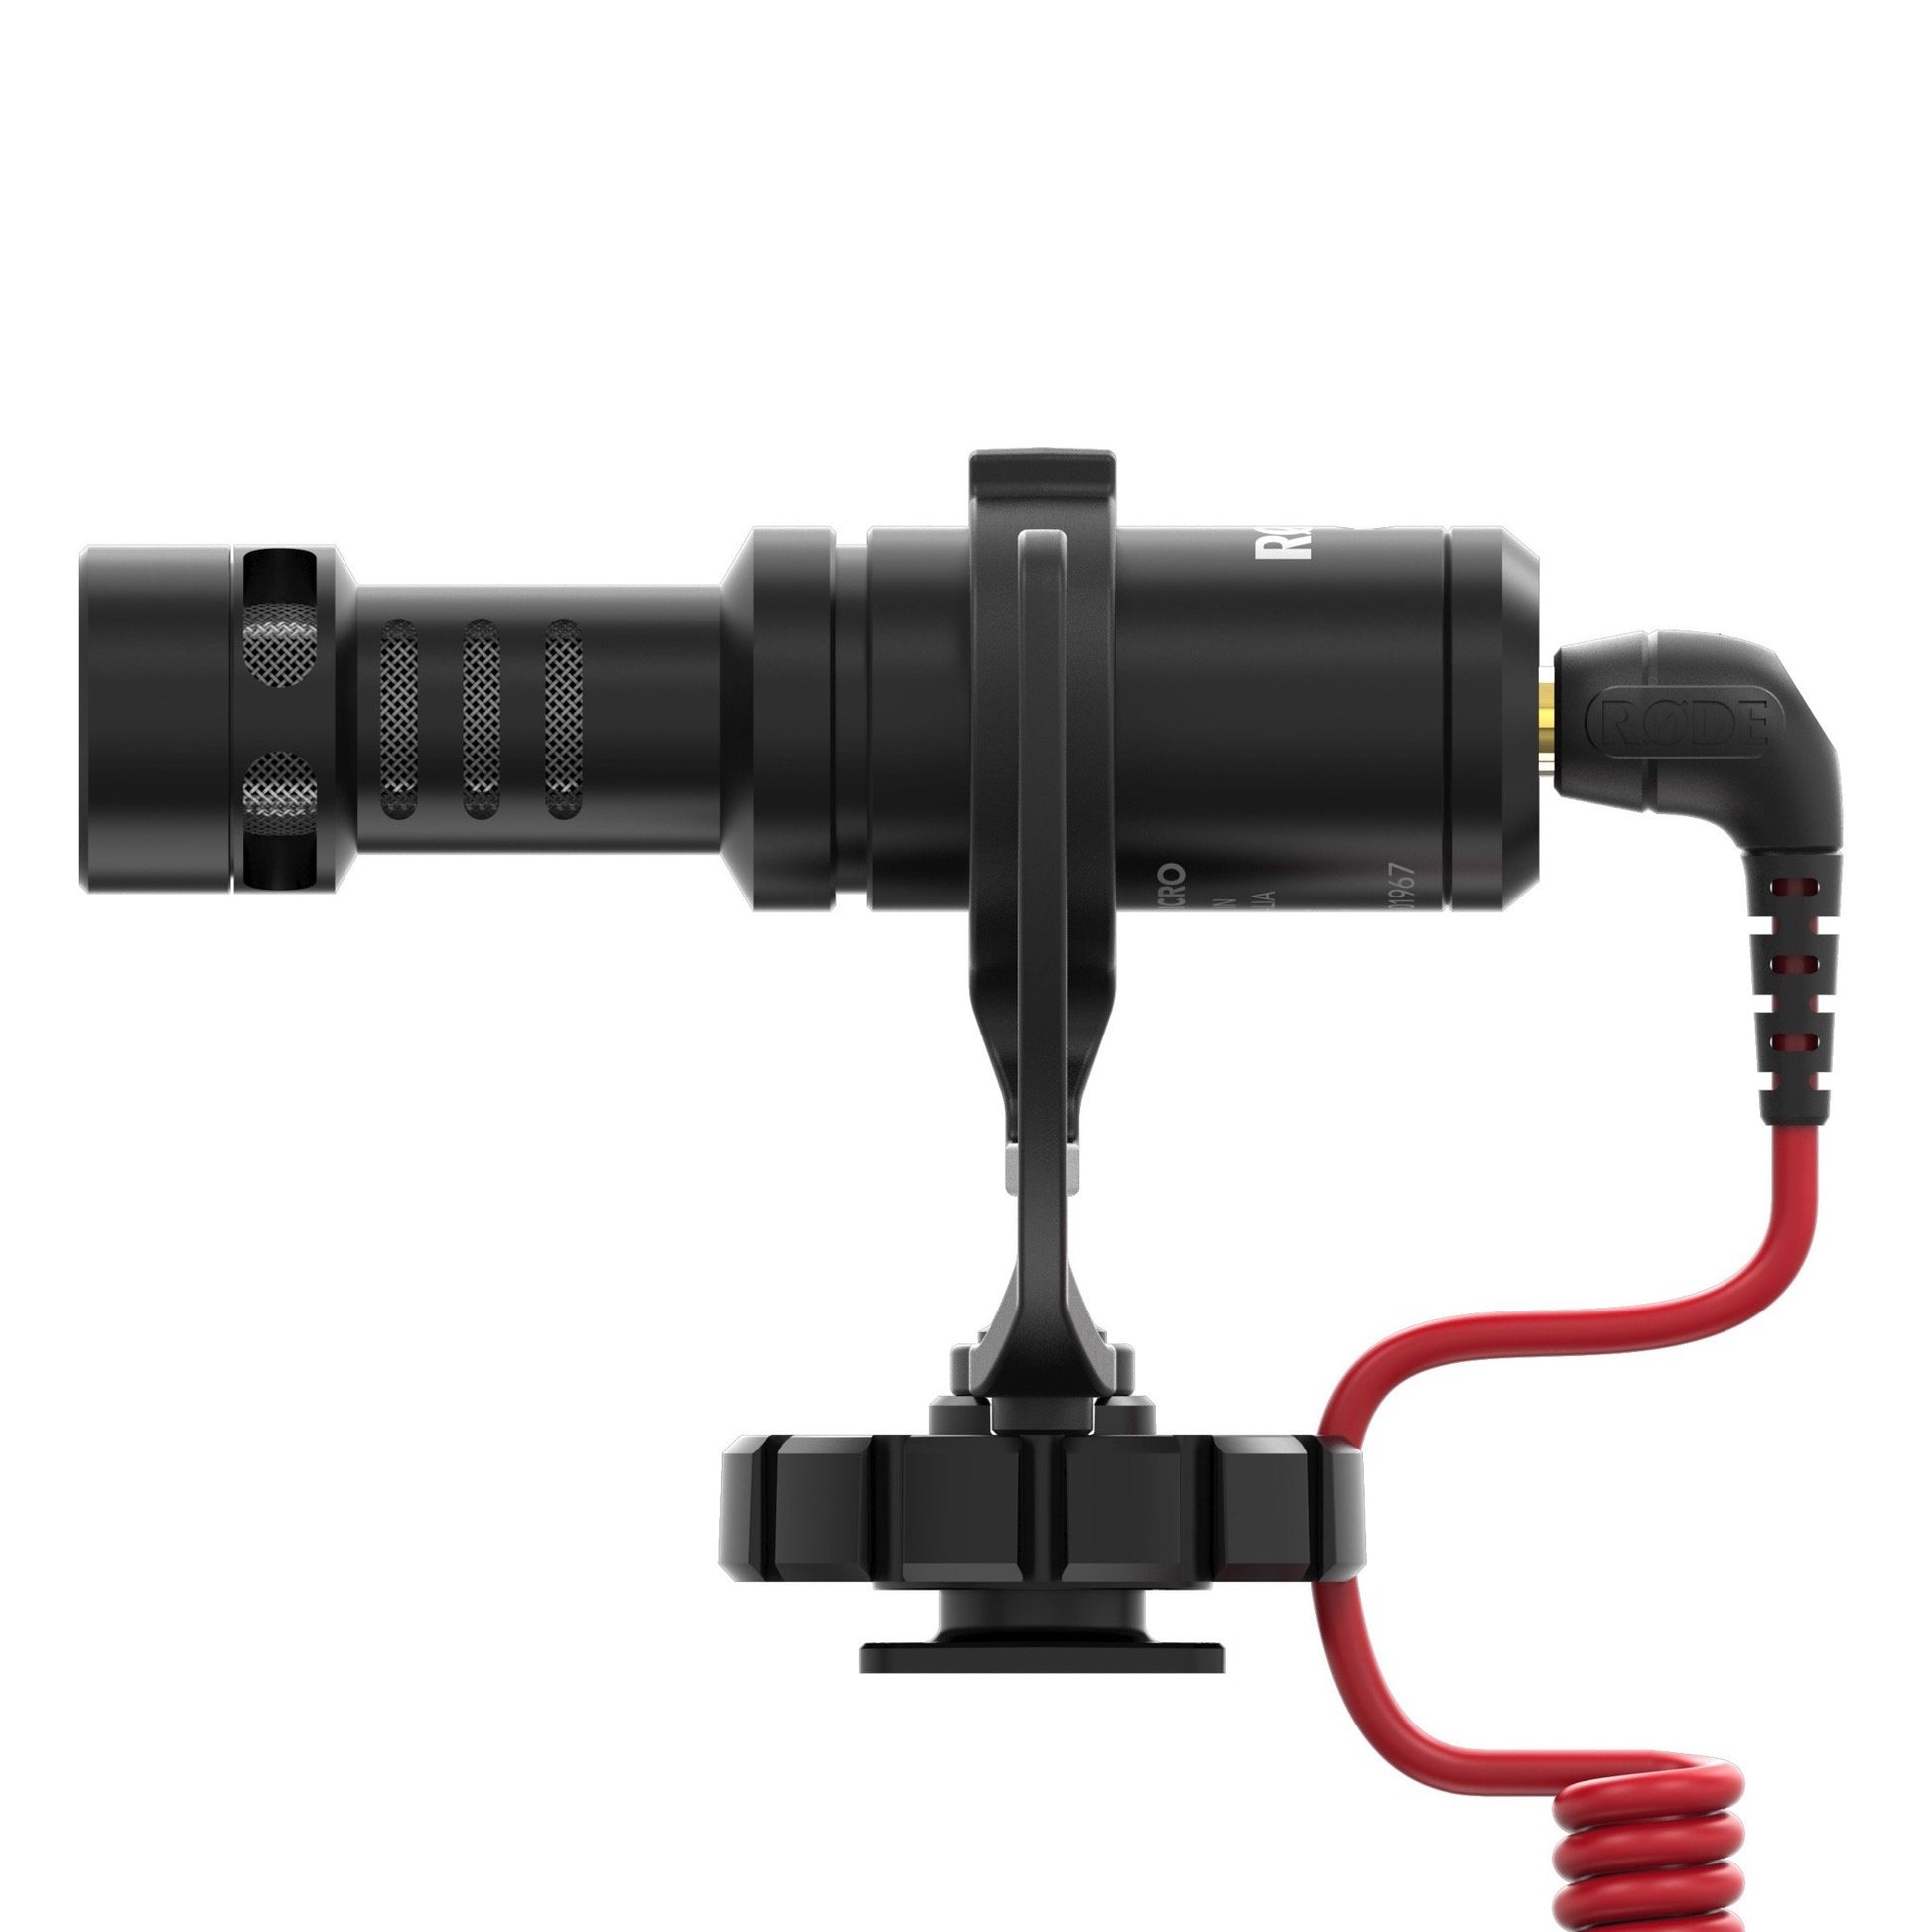 Rode VideoMicro micro caméra compact